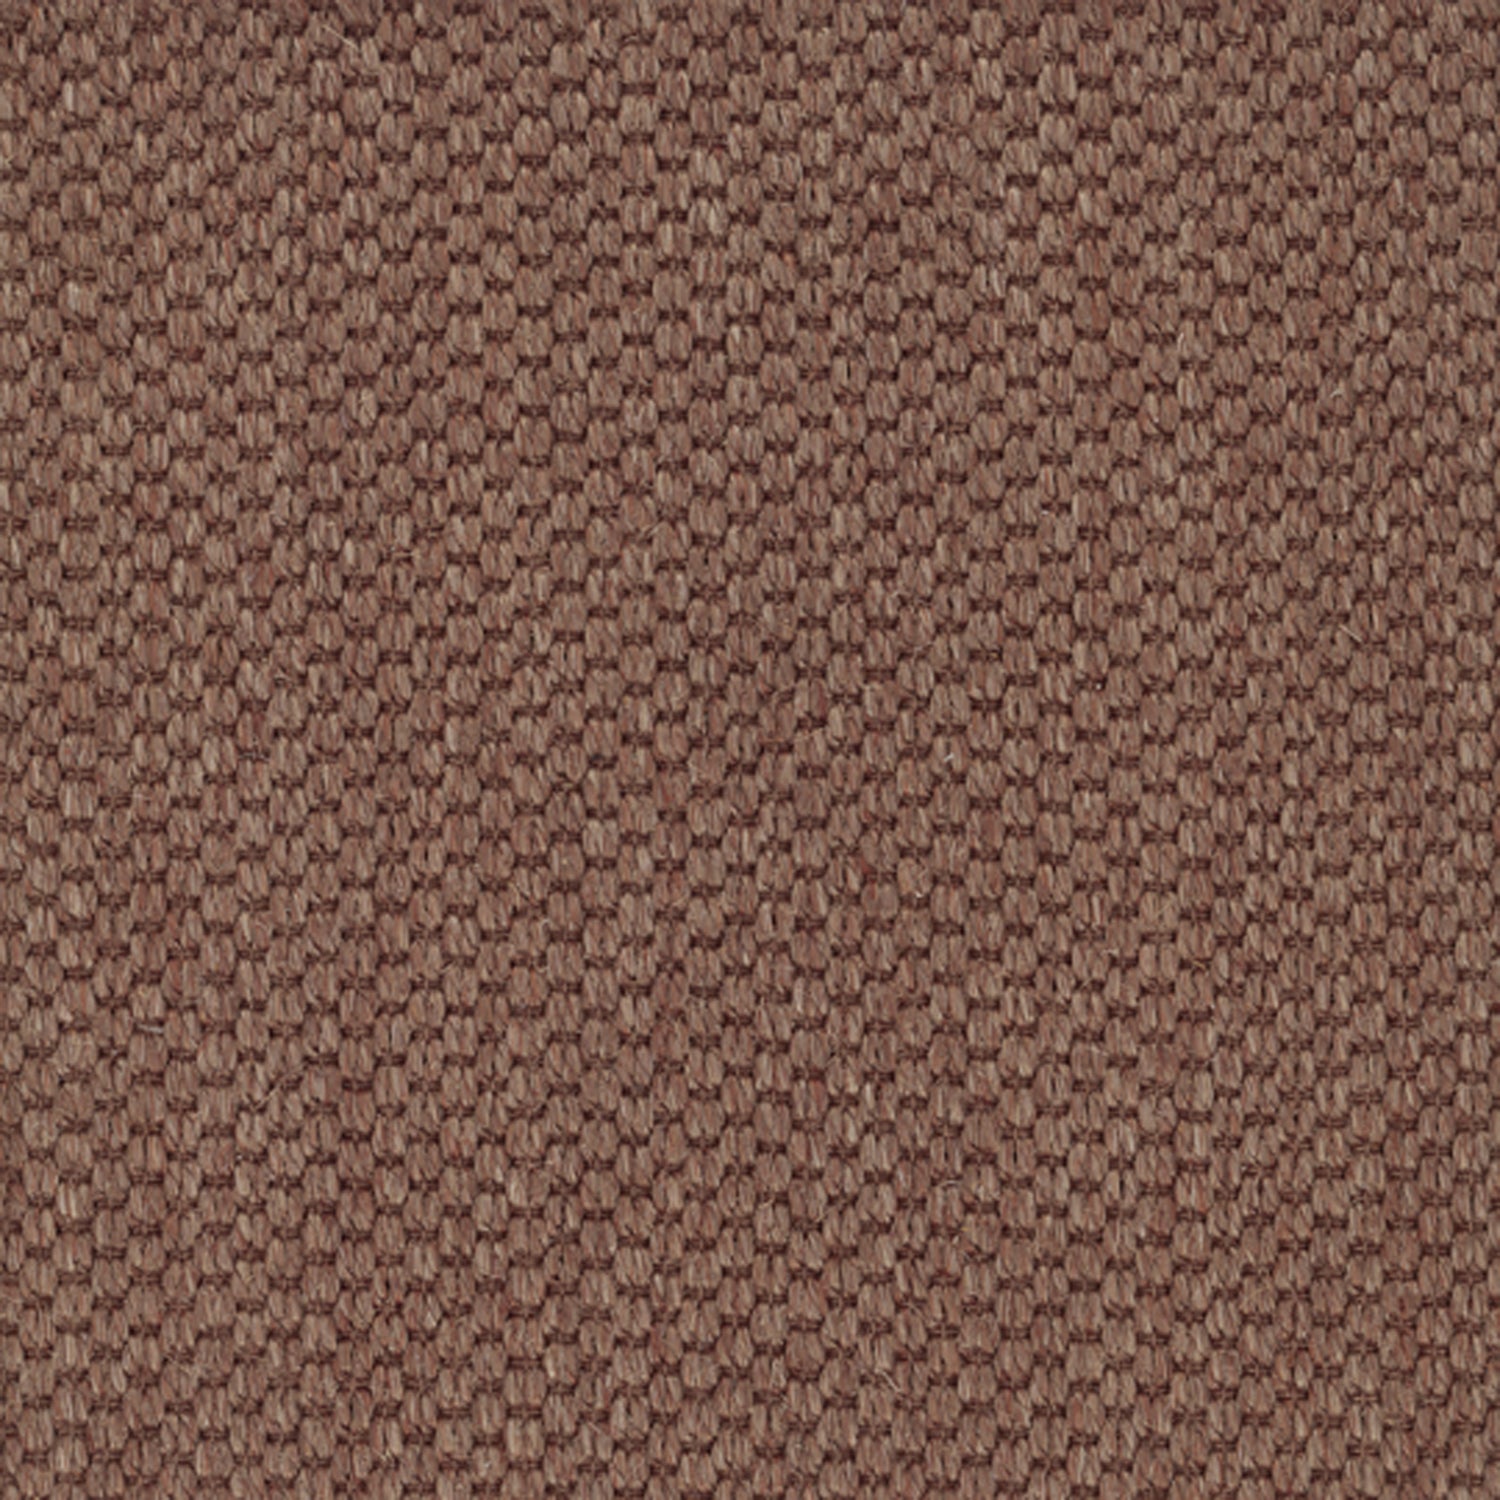 Sisal broadloom carpet swatch in a chunky grid weave in sable and dark brown.